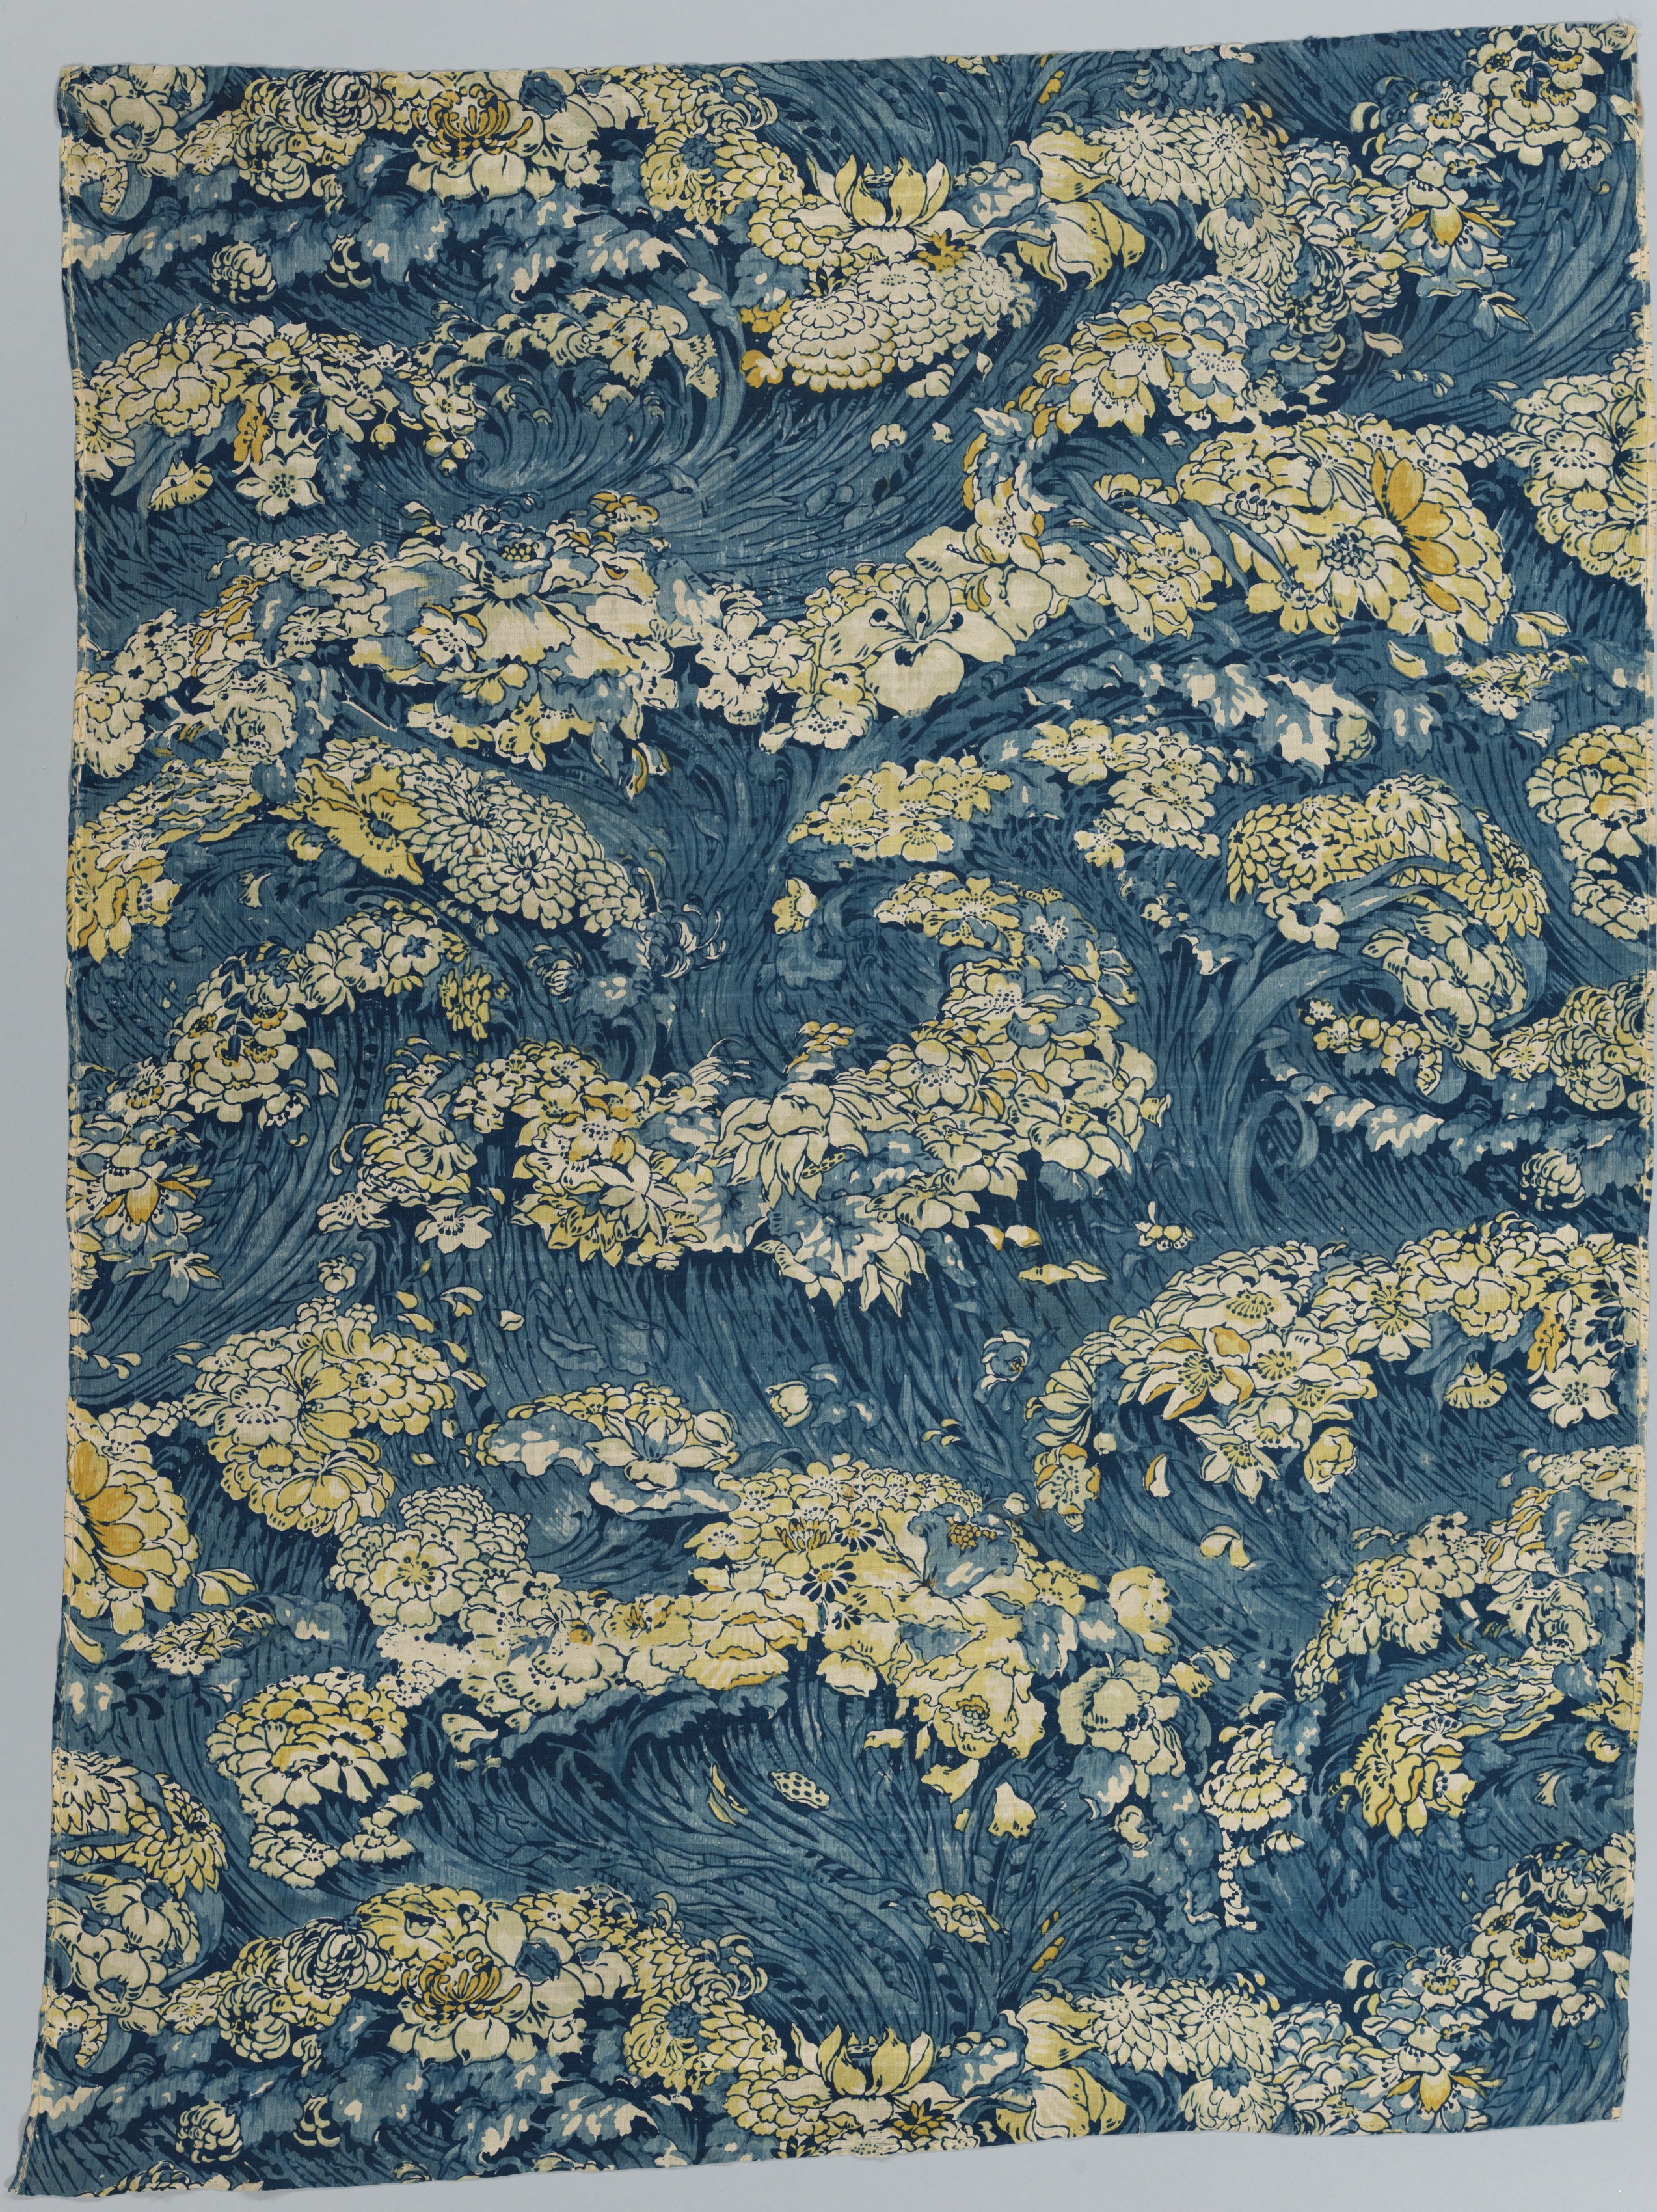 Cloth with Floral Sea Design